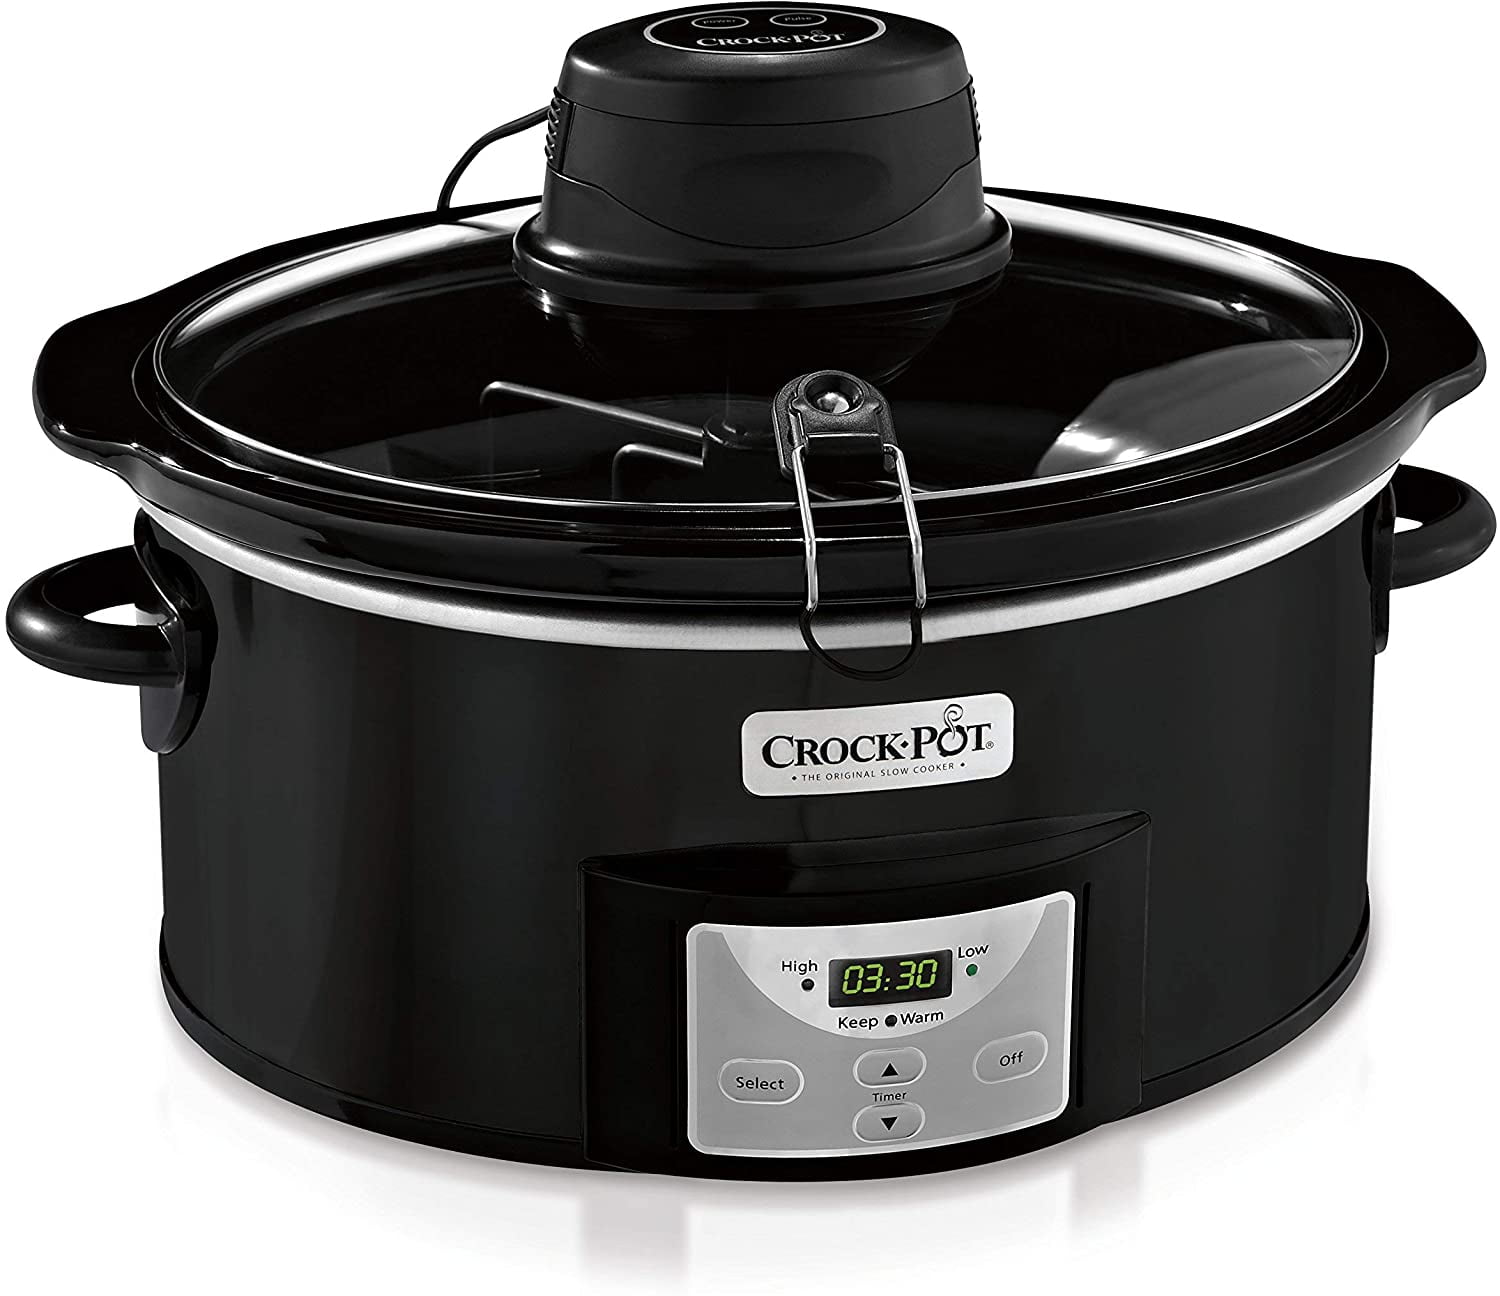  Crock-Pot Smart-Pot 6 Quart Programmable Slow Cooker with  Timer, Food Warmer, Brushed Stainless Steel (SCCPVP600-S): Home & Kitchen